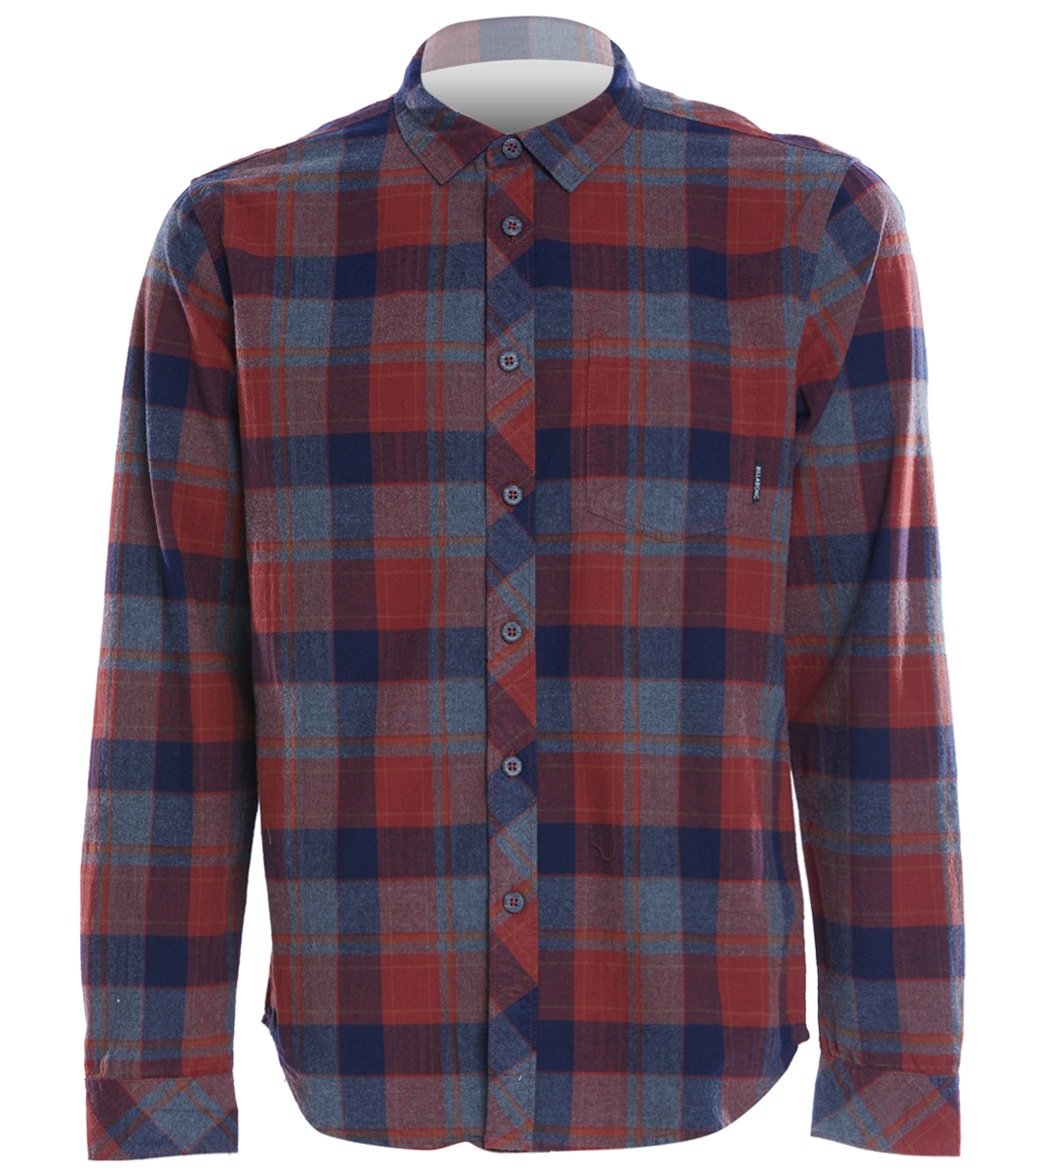 Billabong Men's Coastline Flannel Shirt - Navy Small Cotton/Polyester - Swimoutlet.com